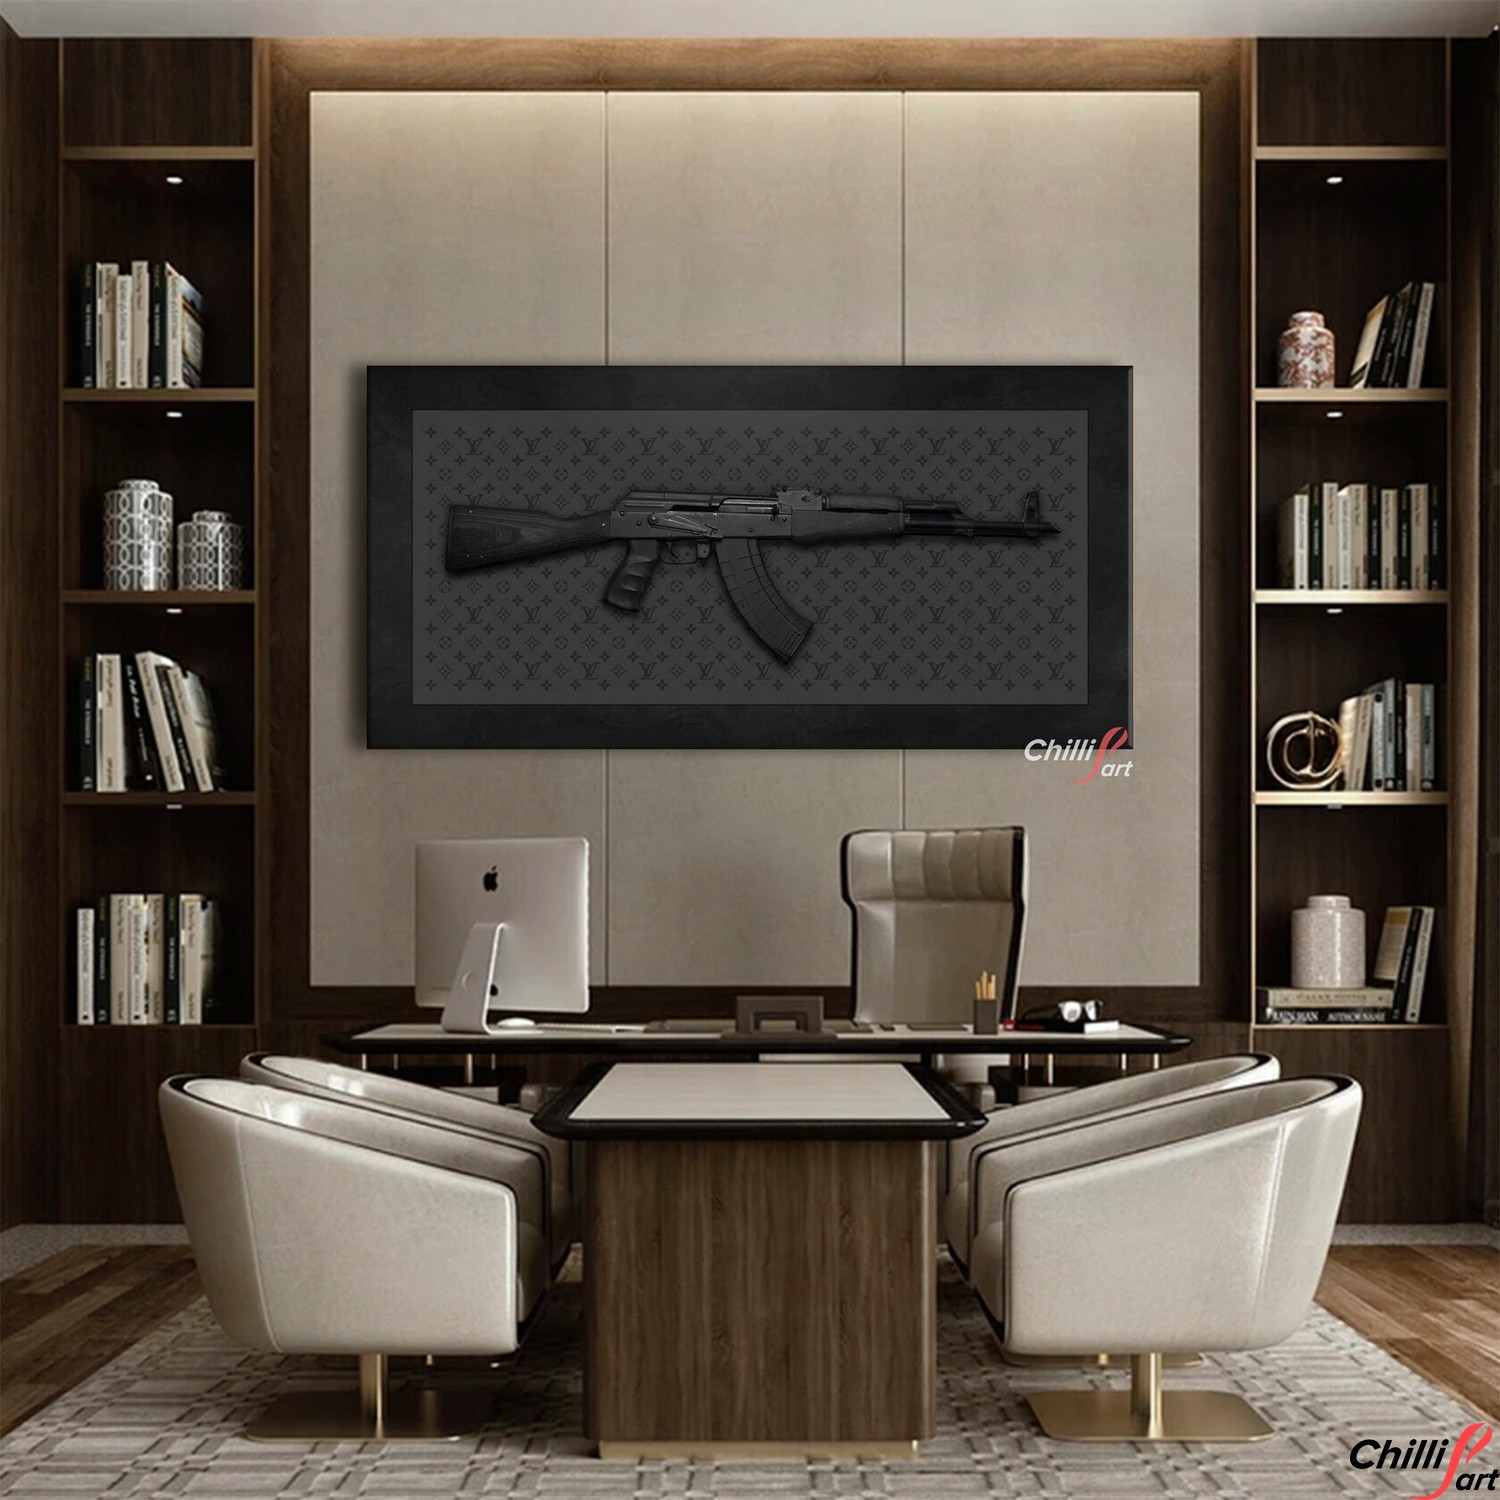 Картина AK-47